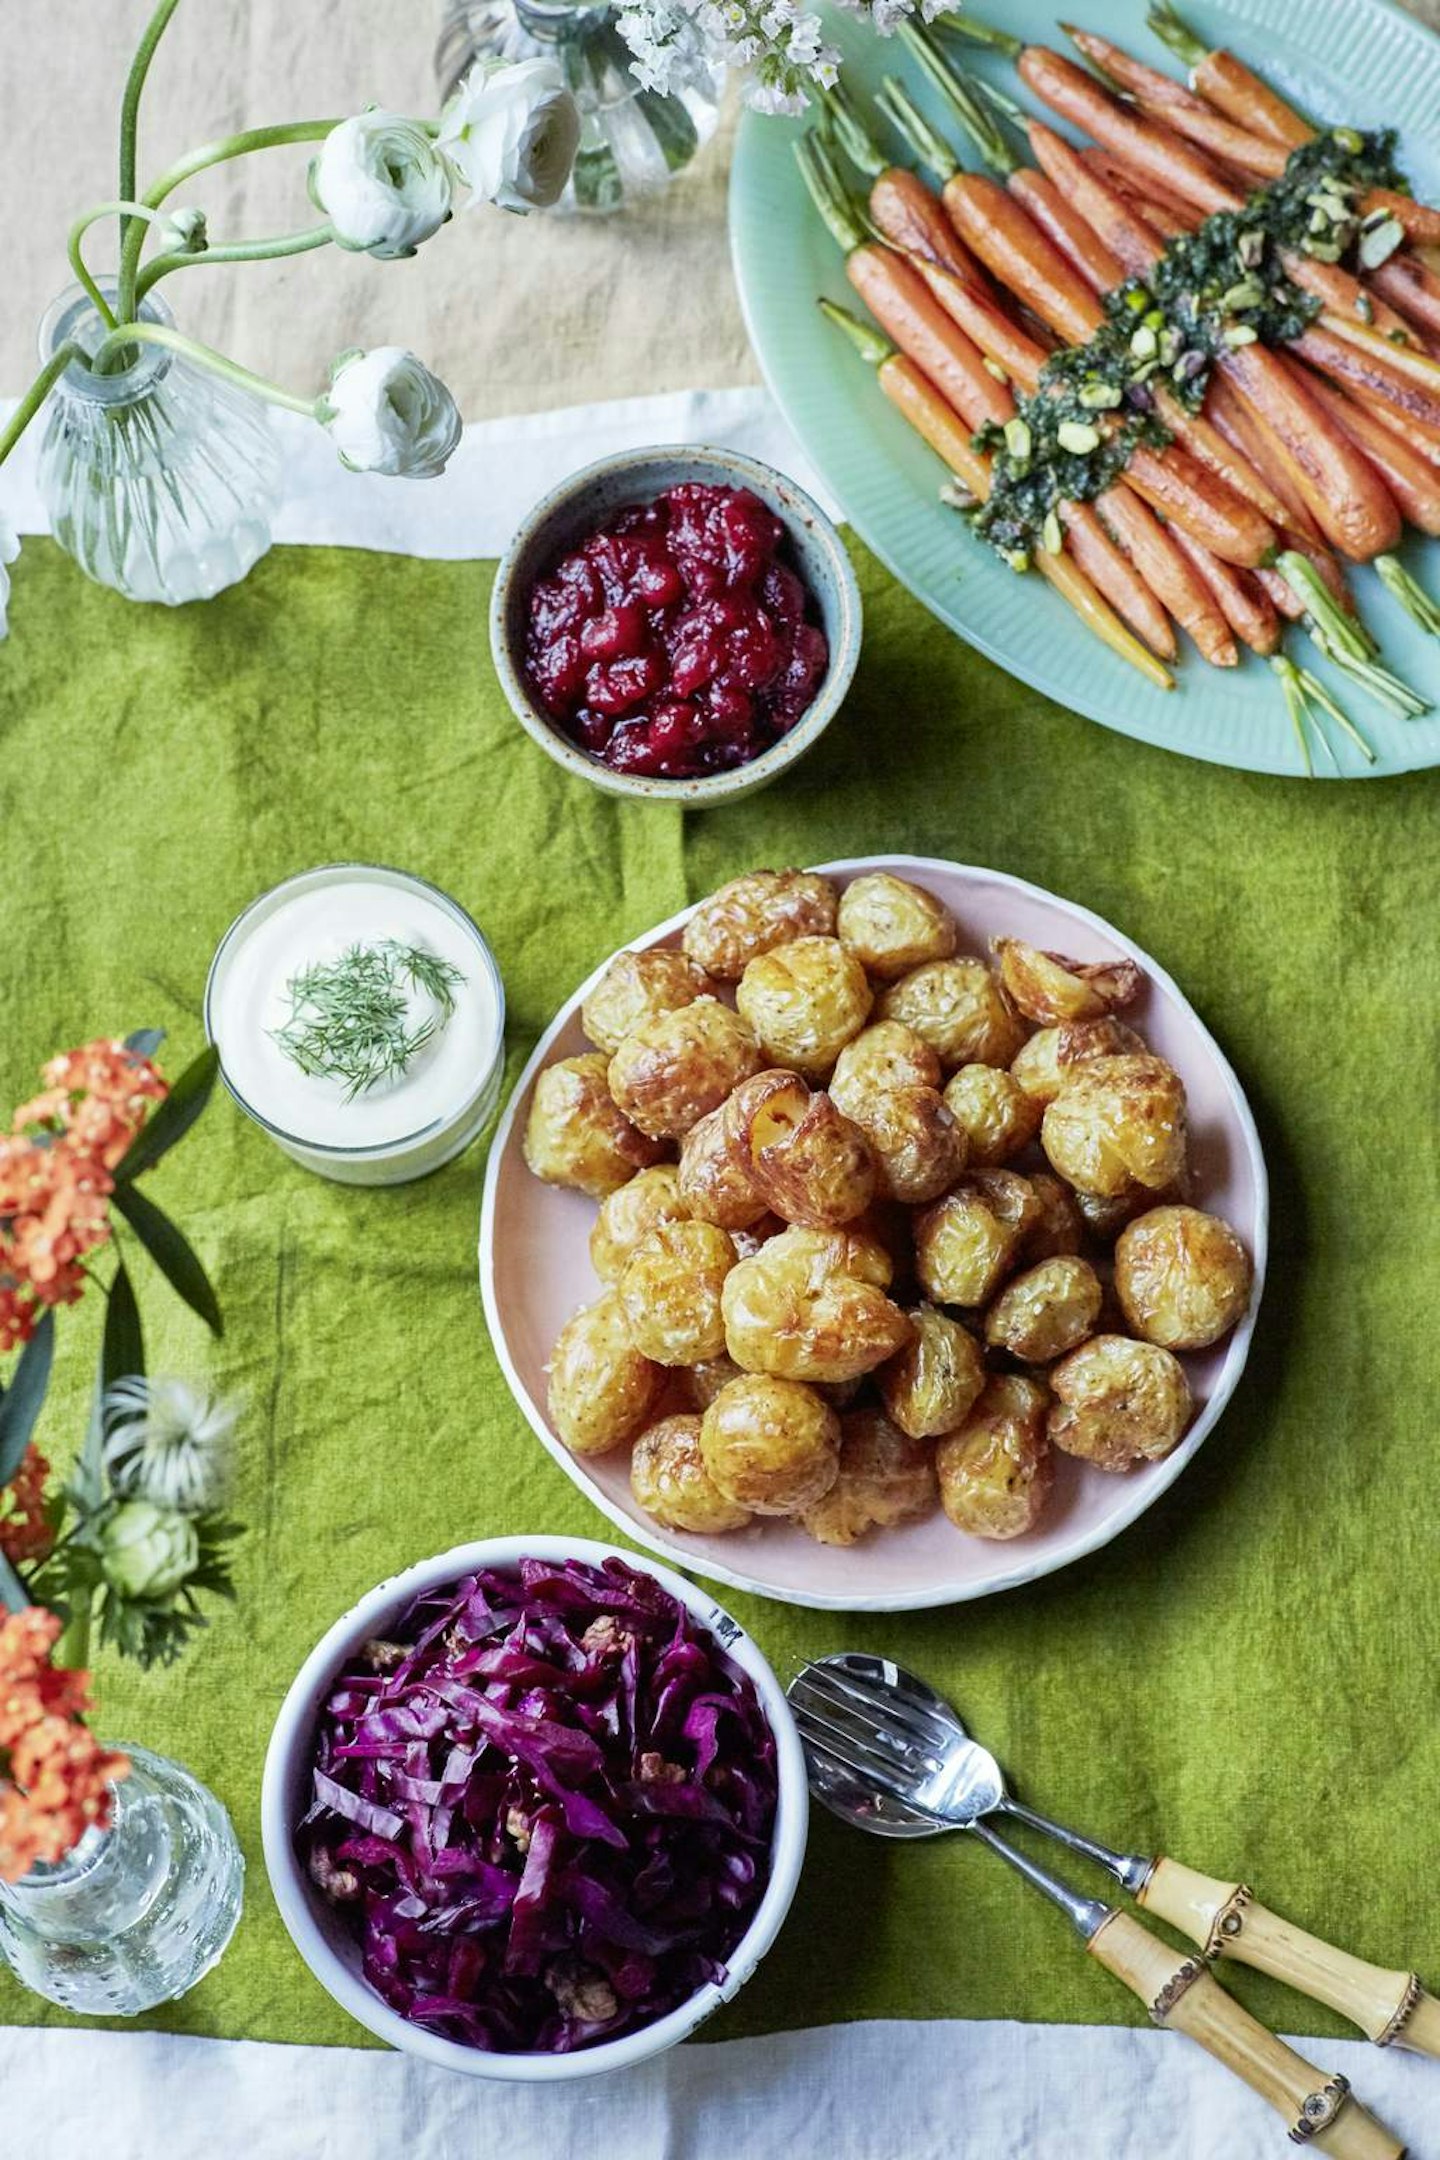 Laura Jackson's Christmas Dinner Recipes: